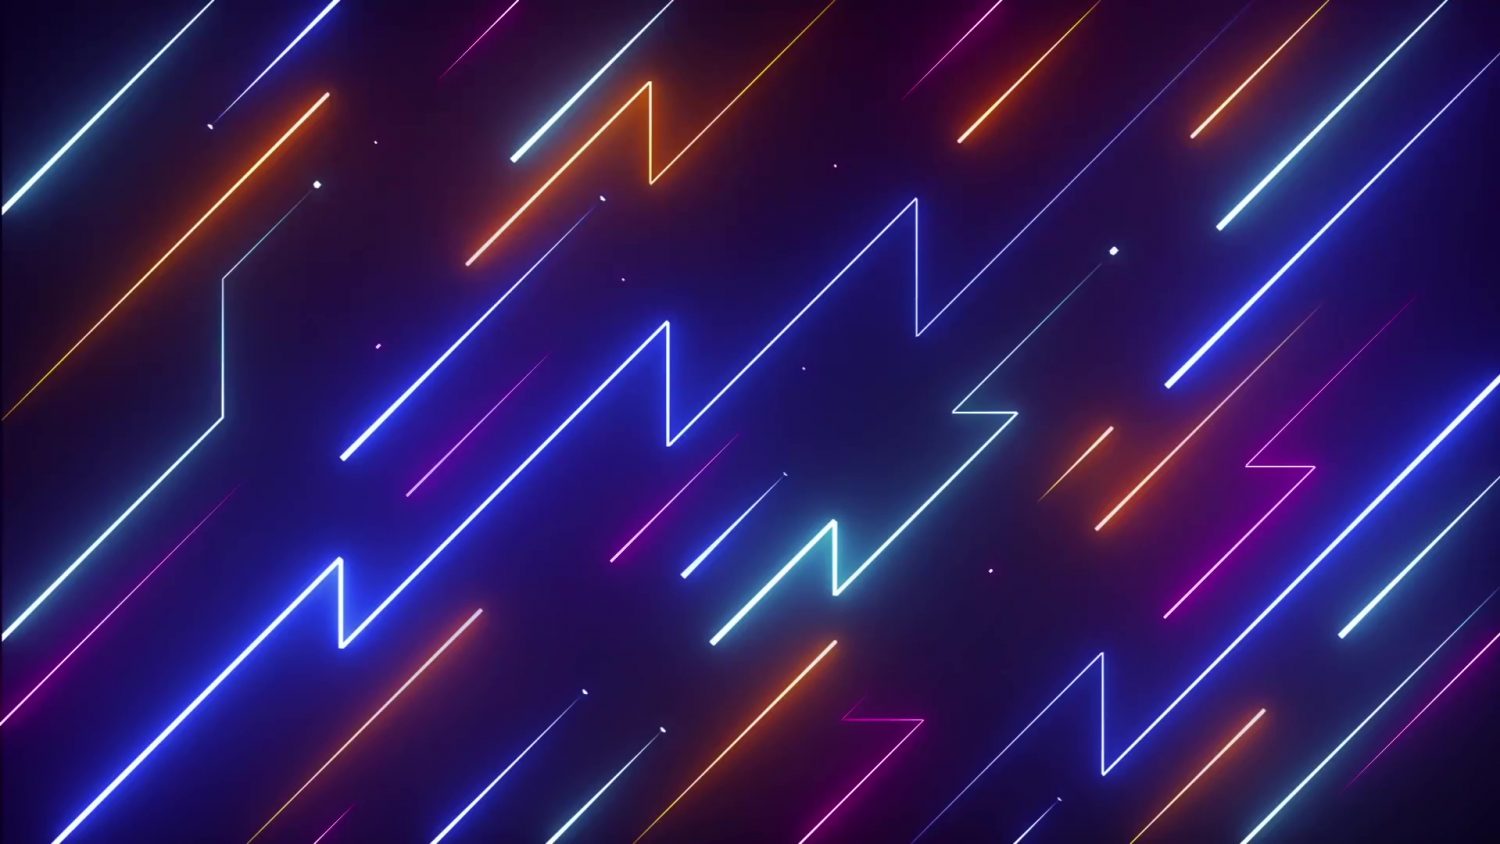 Abstract Glowing Neon Lines Live Wallpaper - WallpaperWaifu